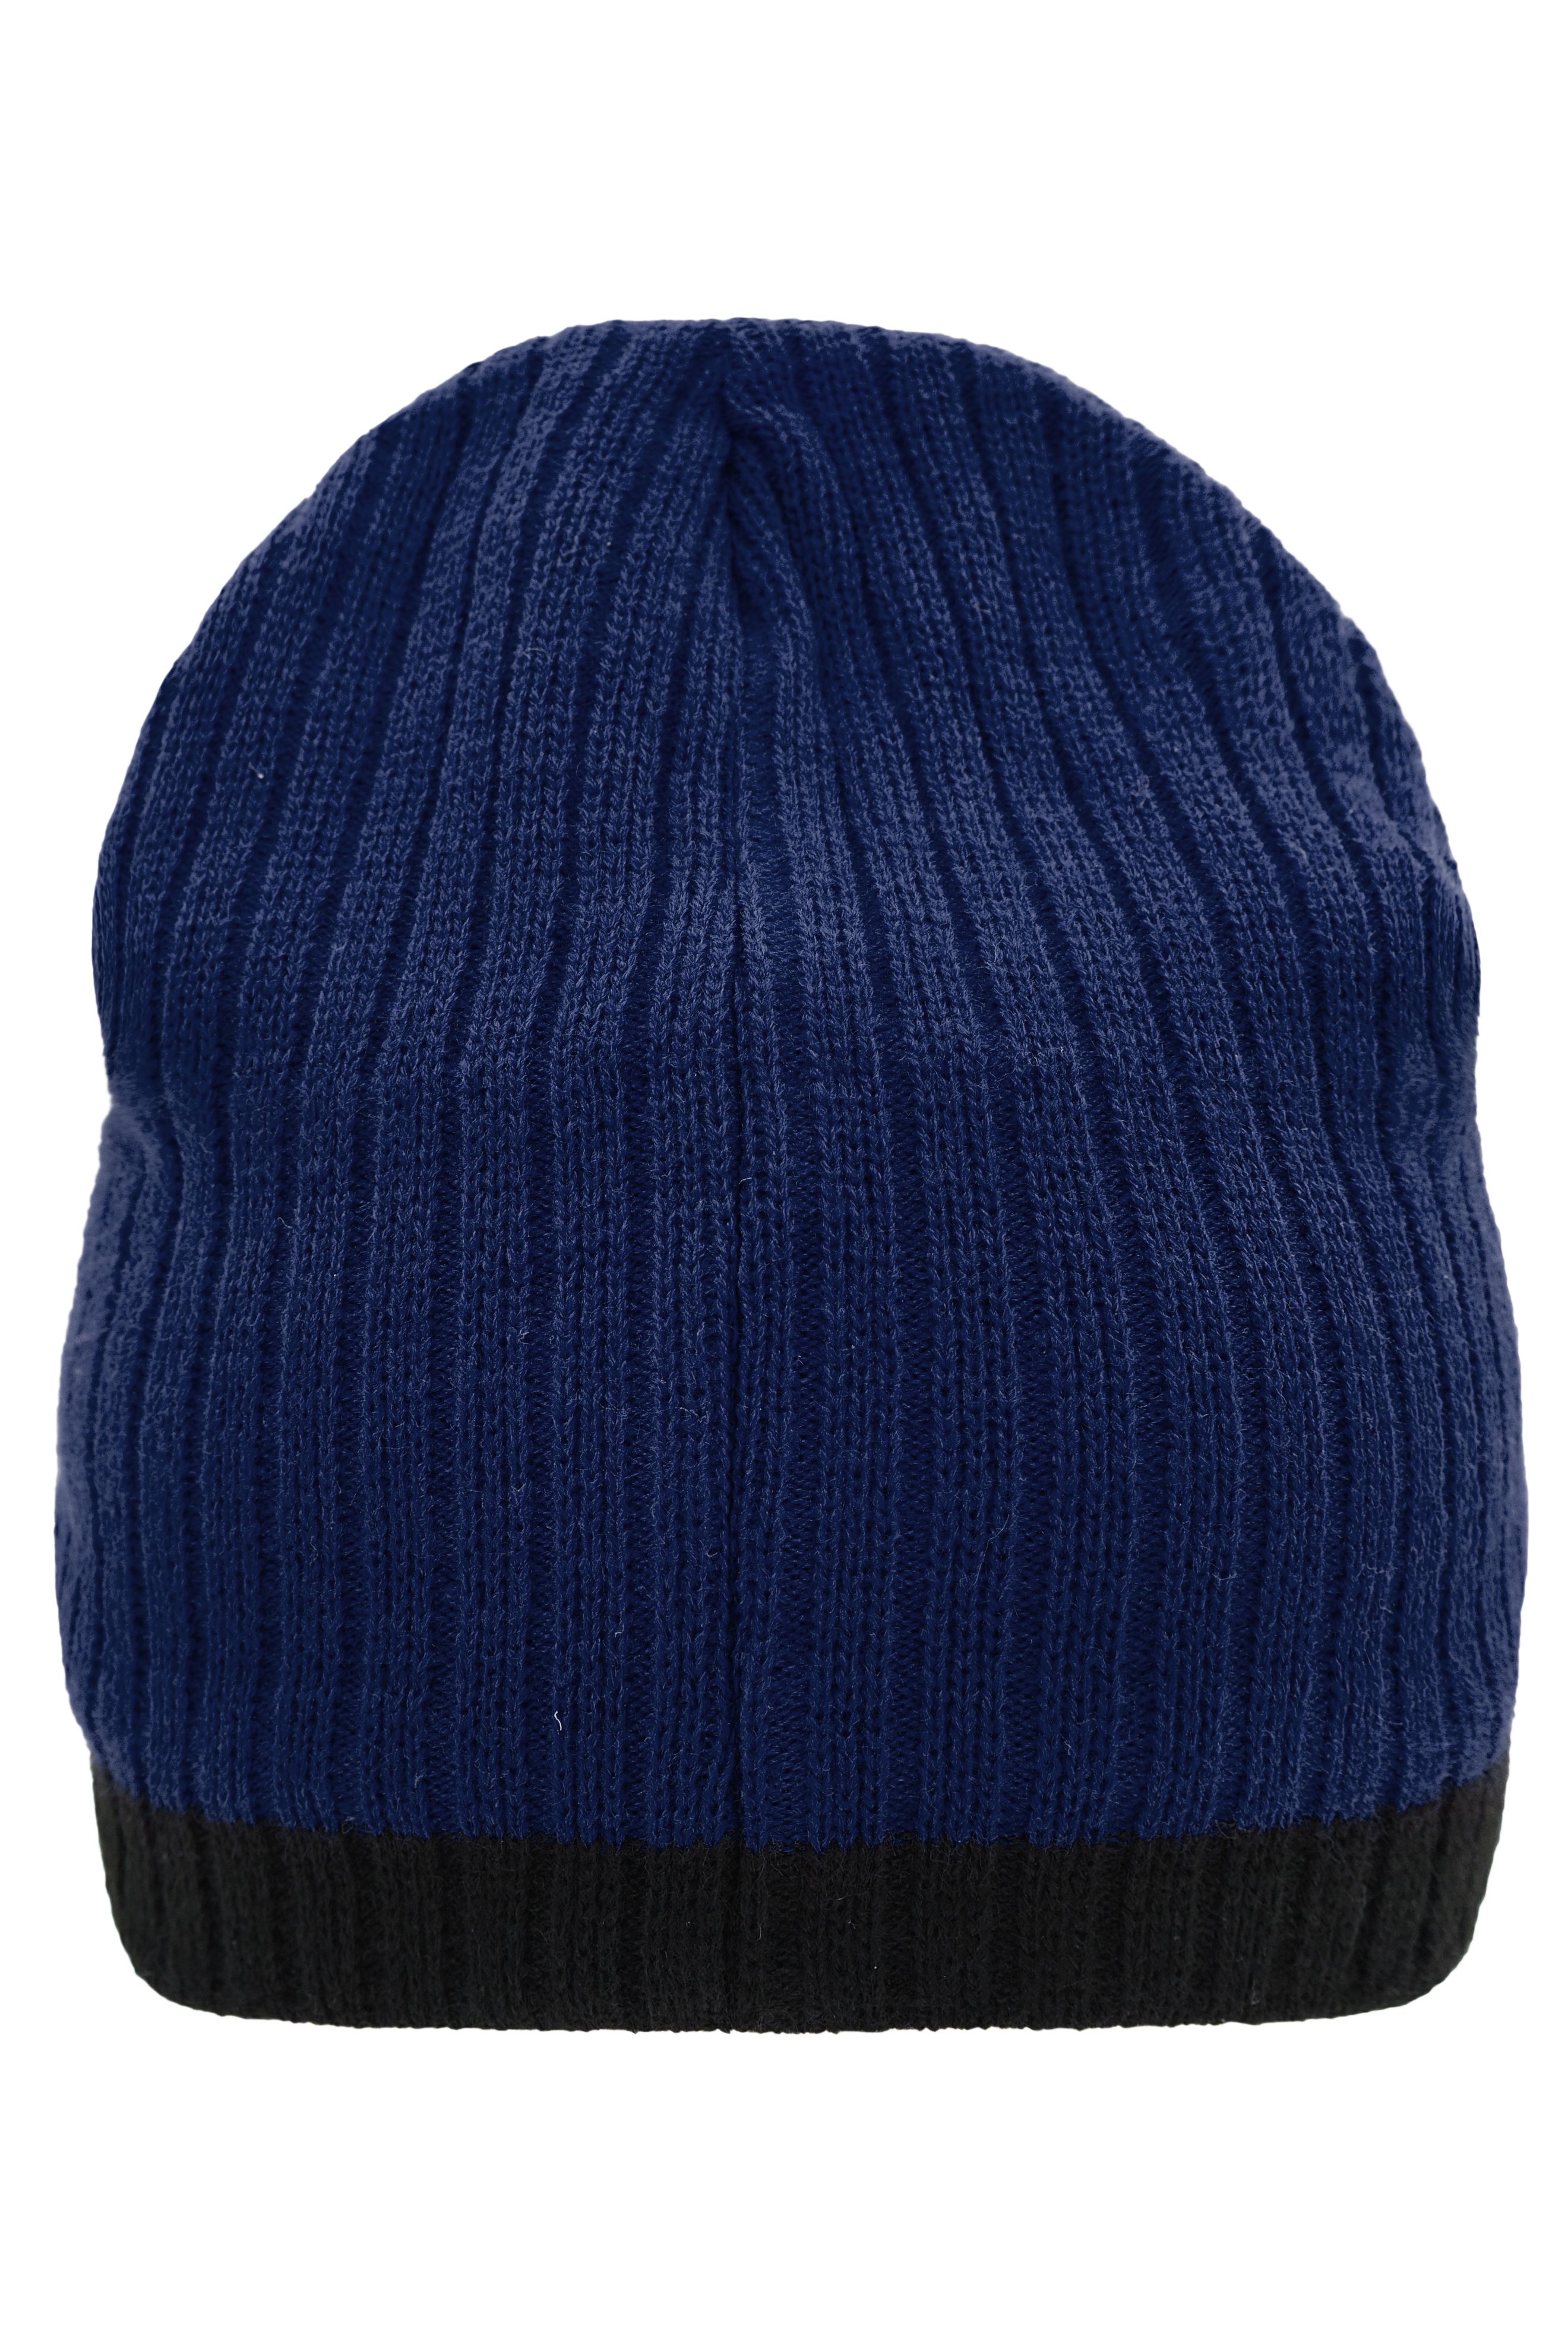 Knitted Hat MB7102 Strickmütze in klassischer Ripp-Optik